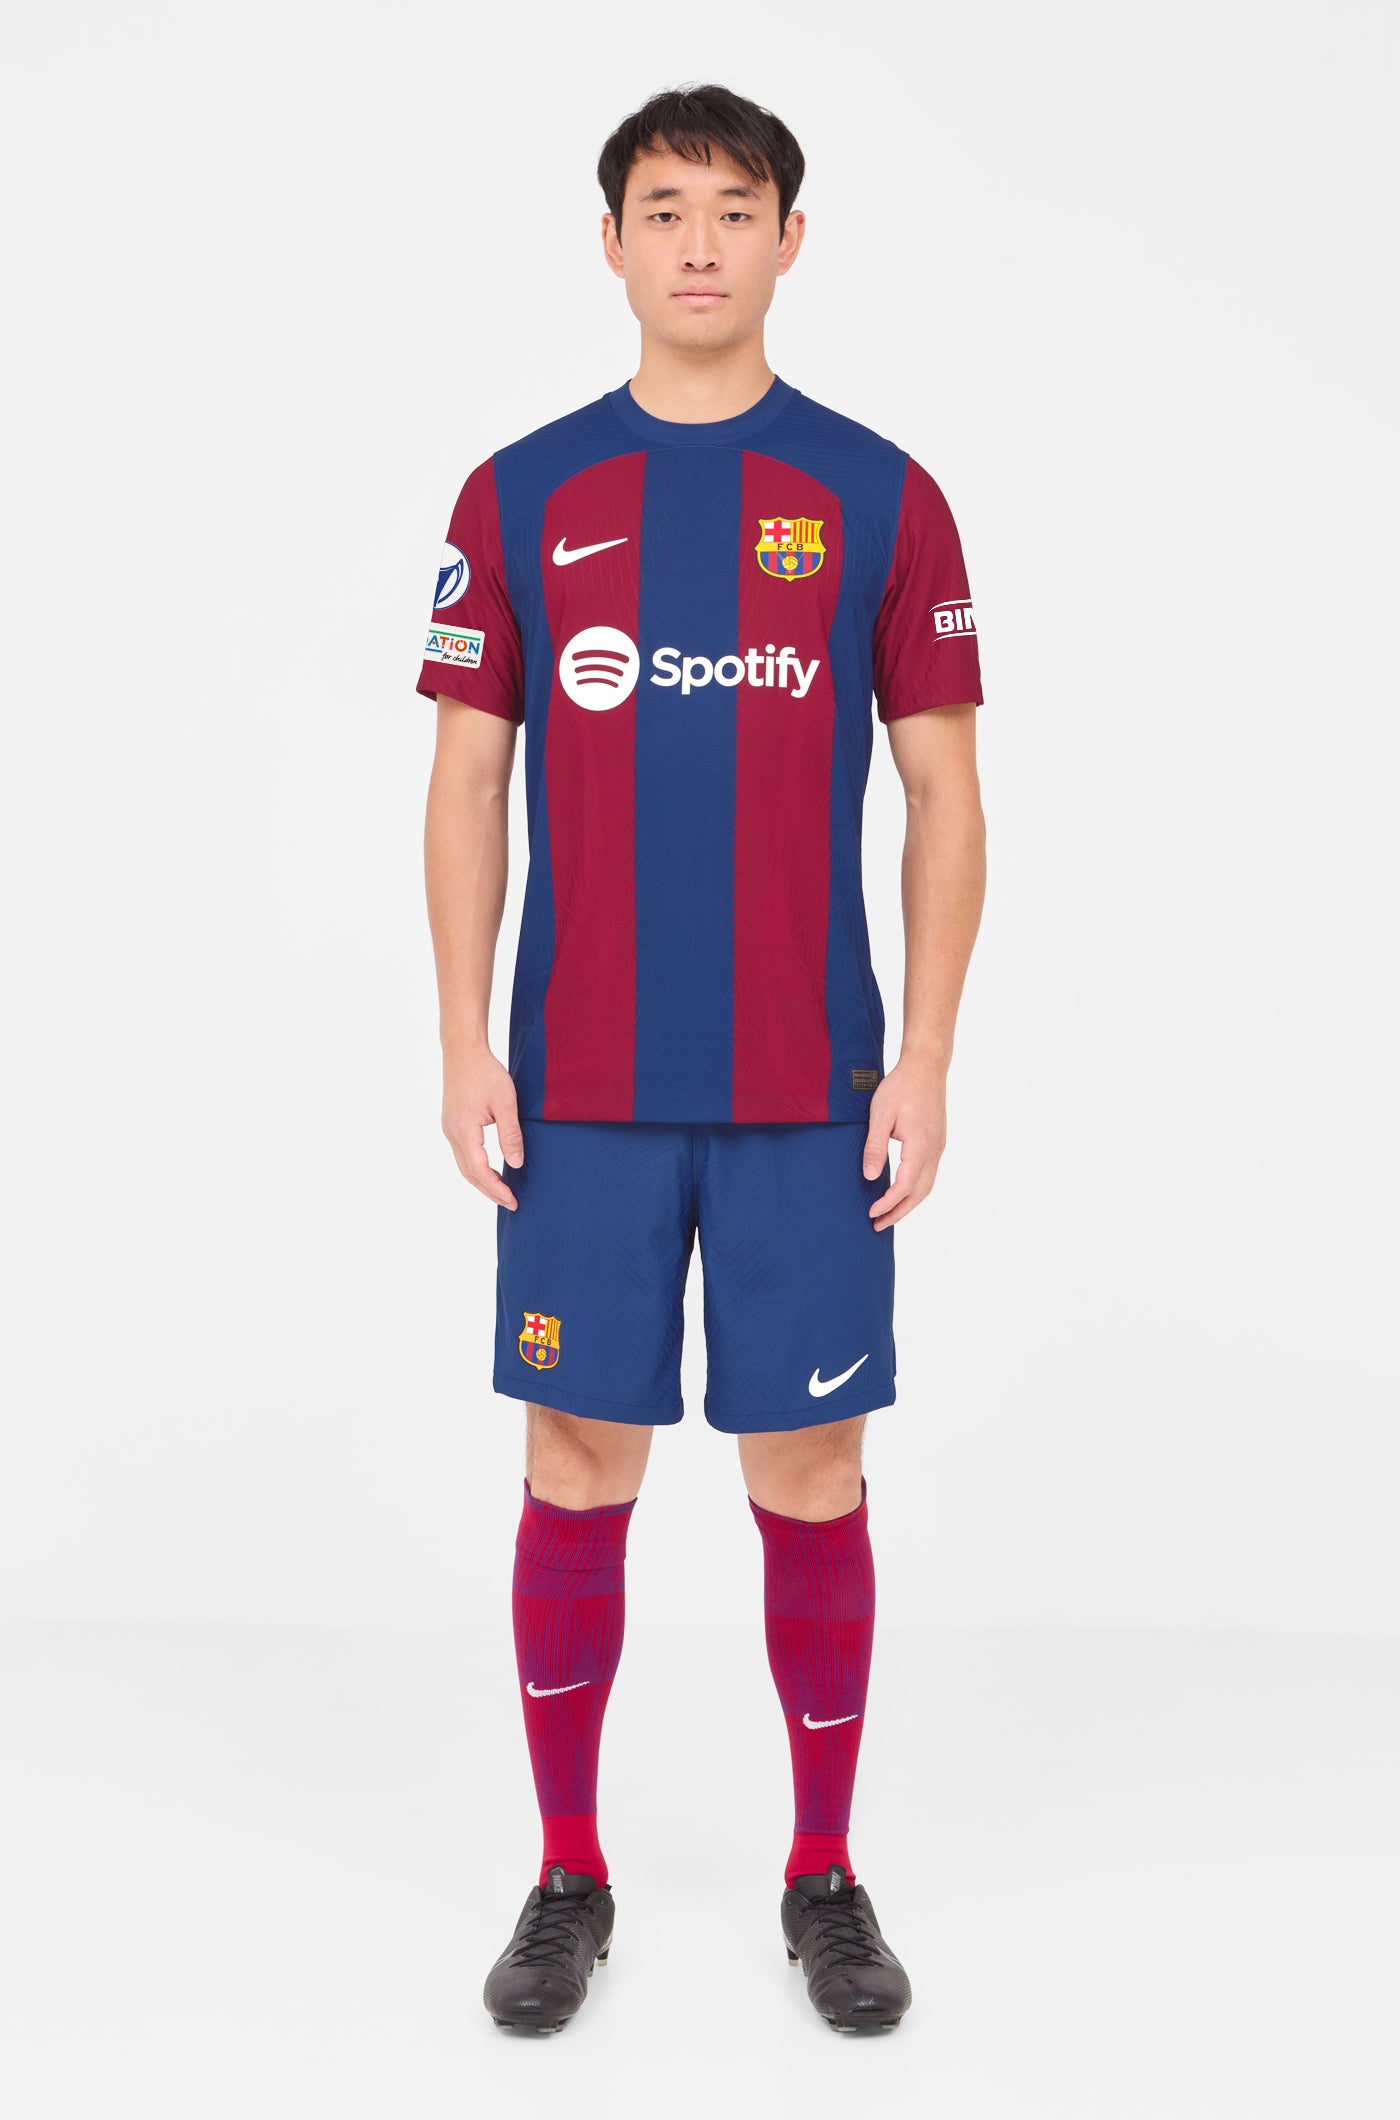 UWCL FC Barcelona home shirt 23/24 Player's Edition